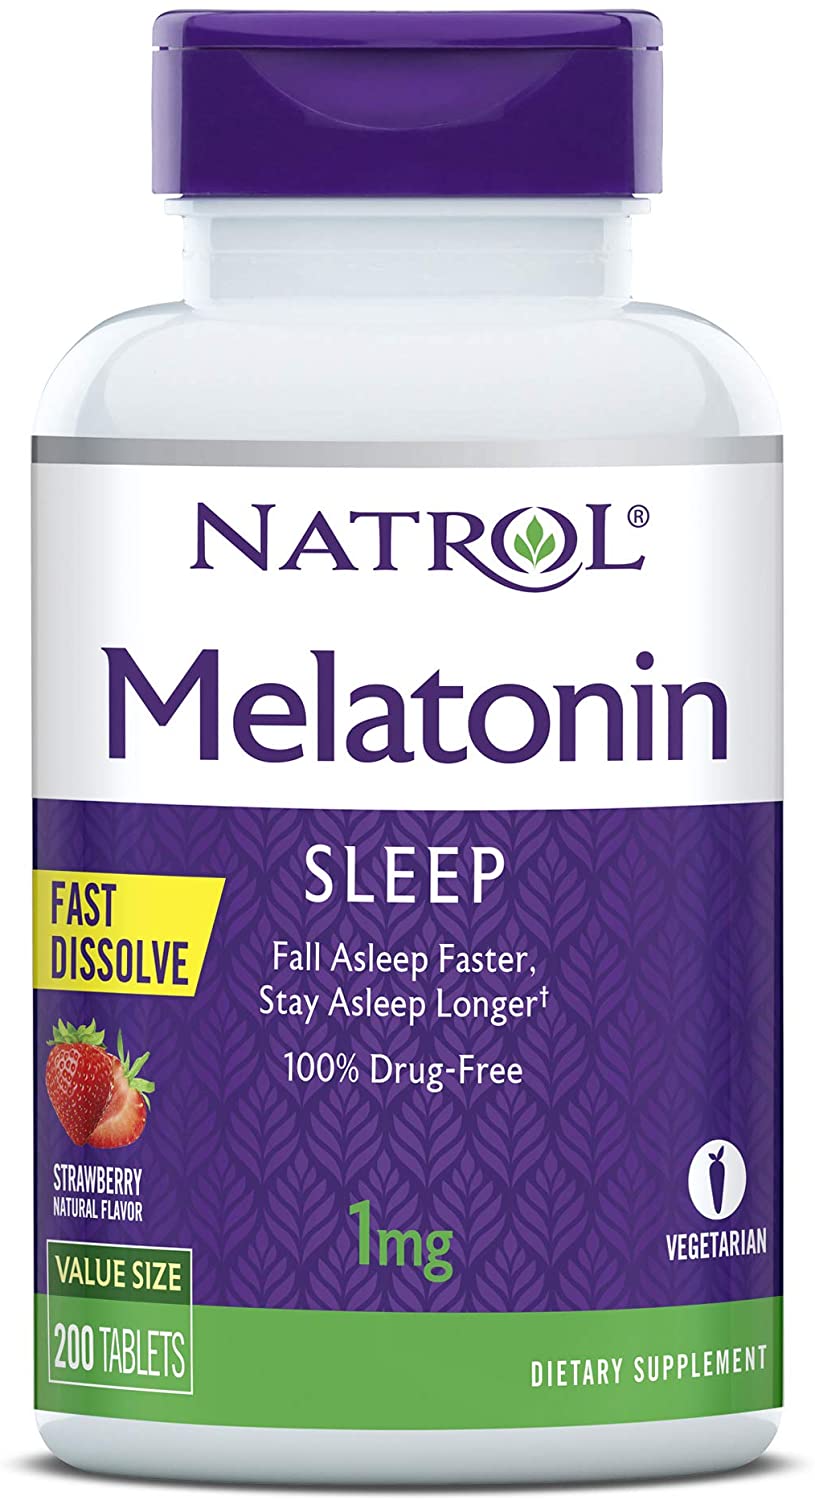 Review of Natrol Melatonin Fast Dissolve Tablets, sleep aid